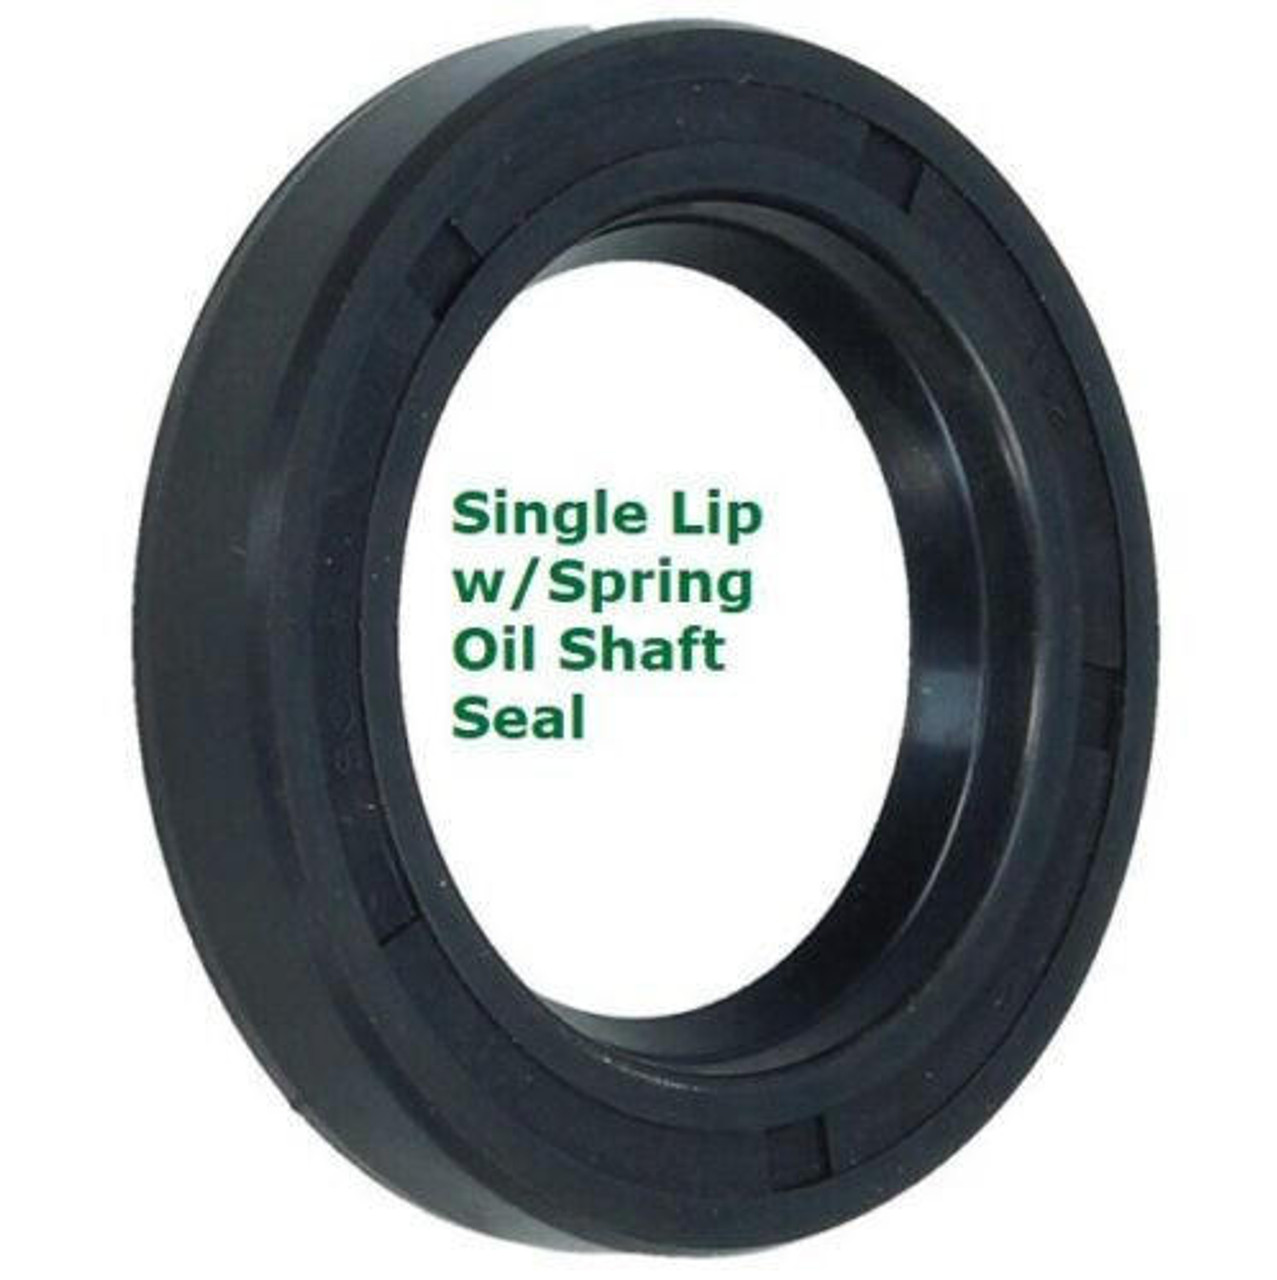 Metric Oil Shaft Seal 122 x 150 x 15mm   Single Lip   Price for 1 pc